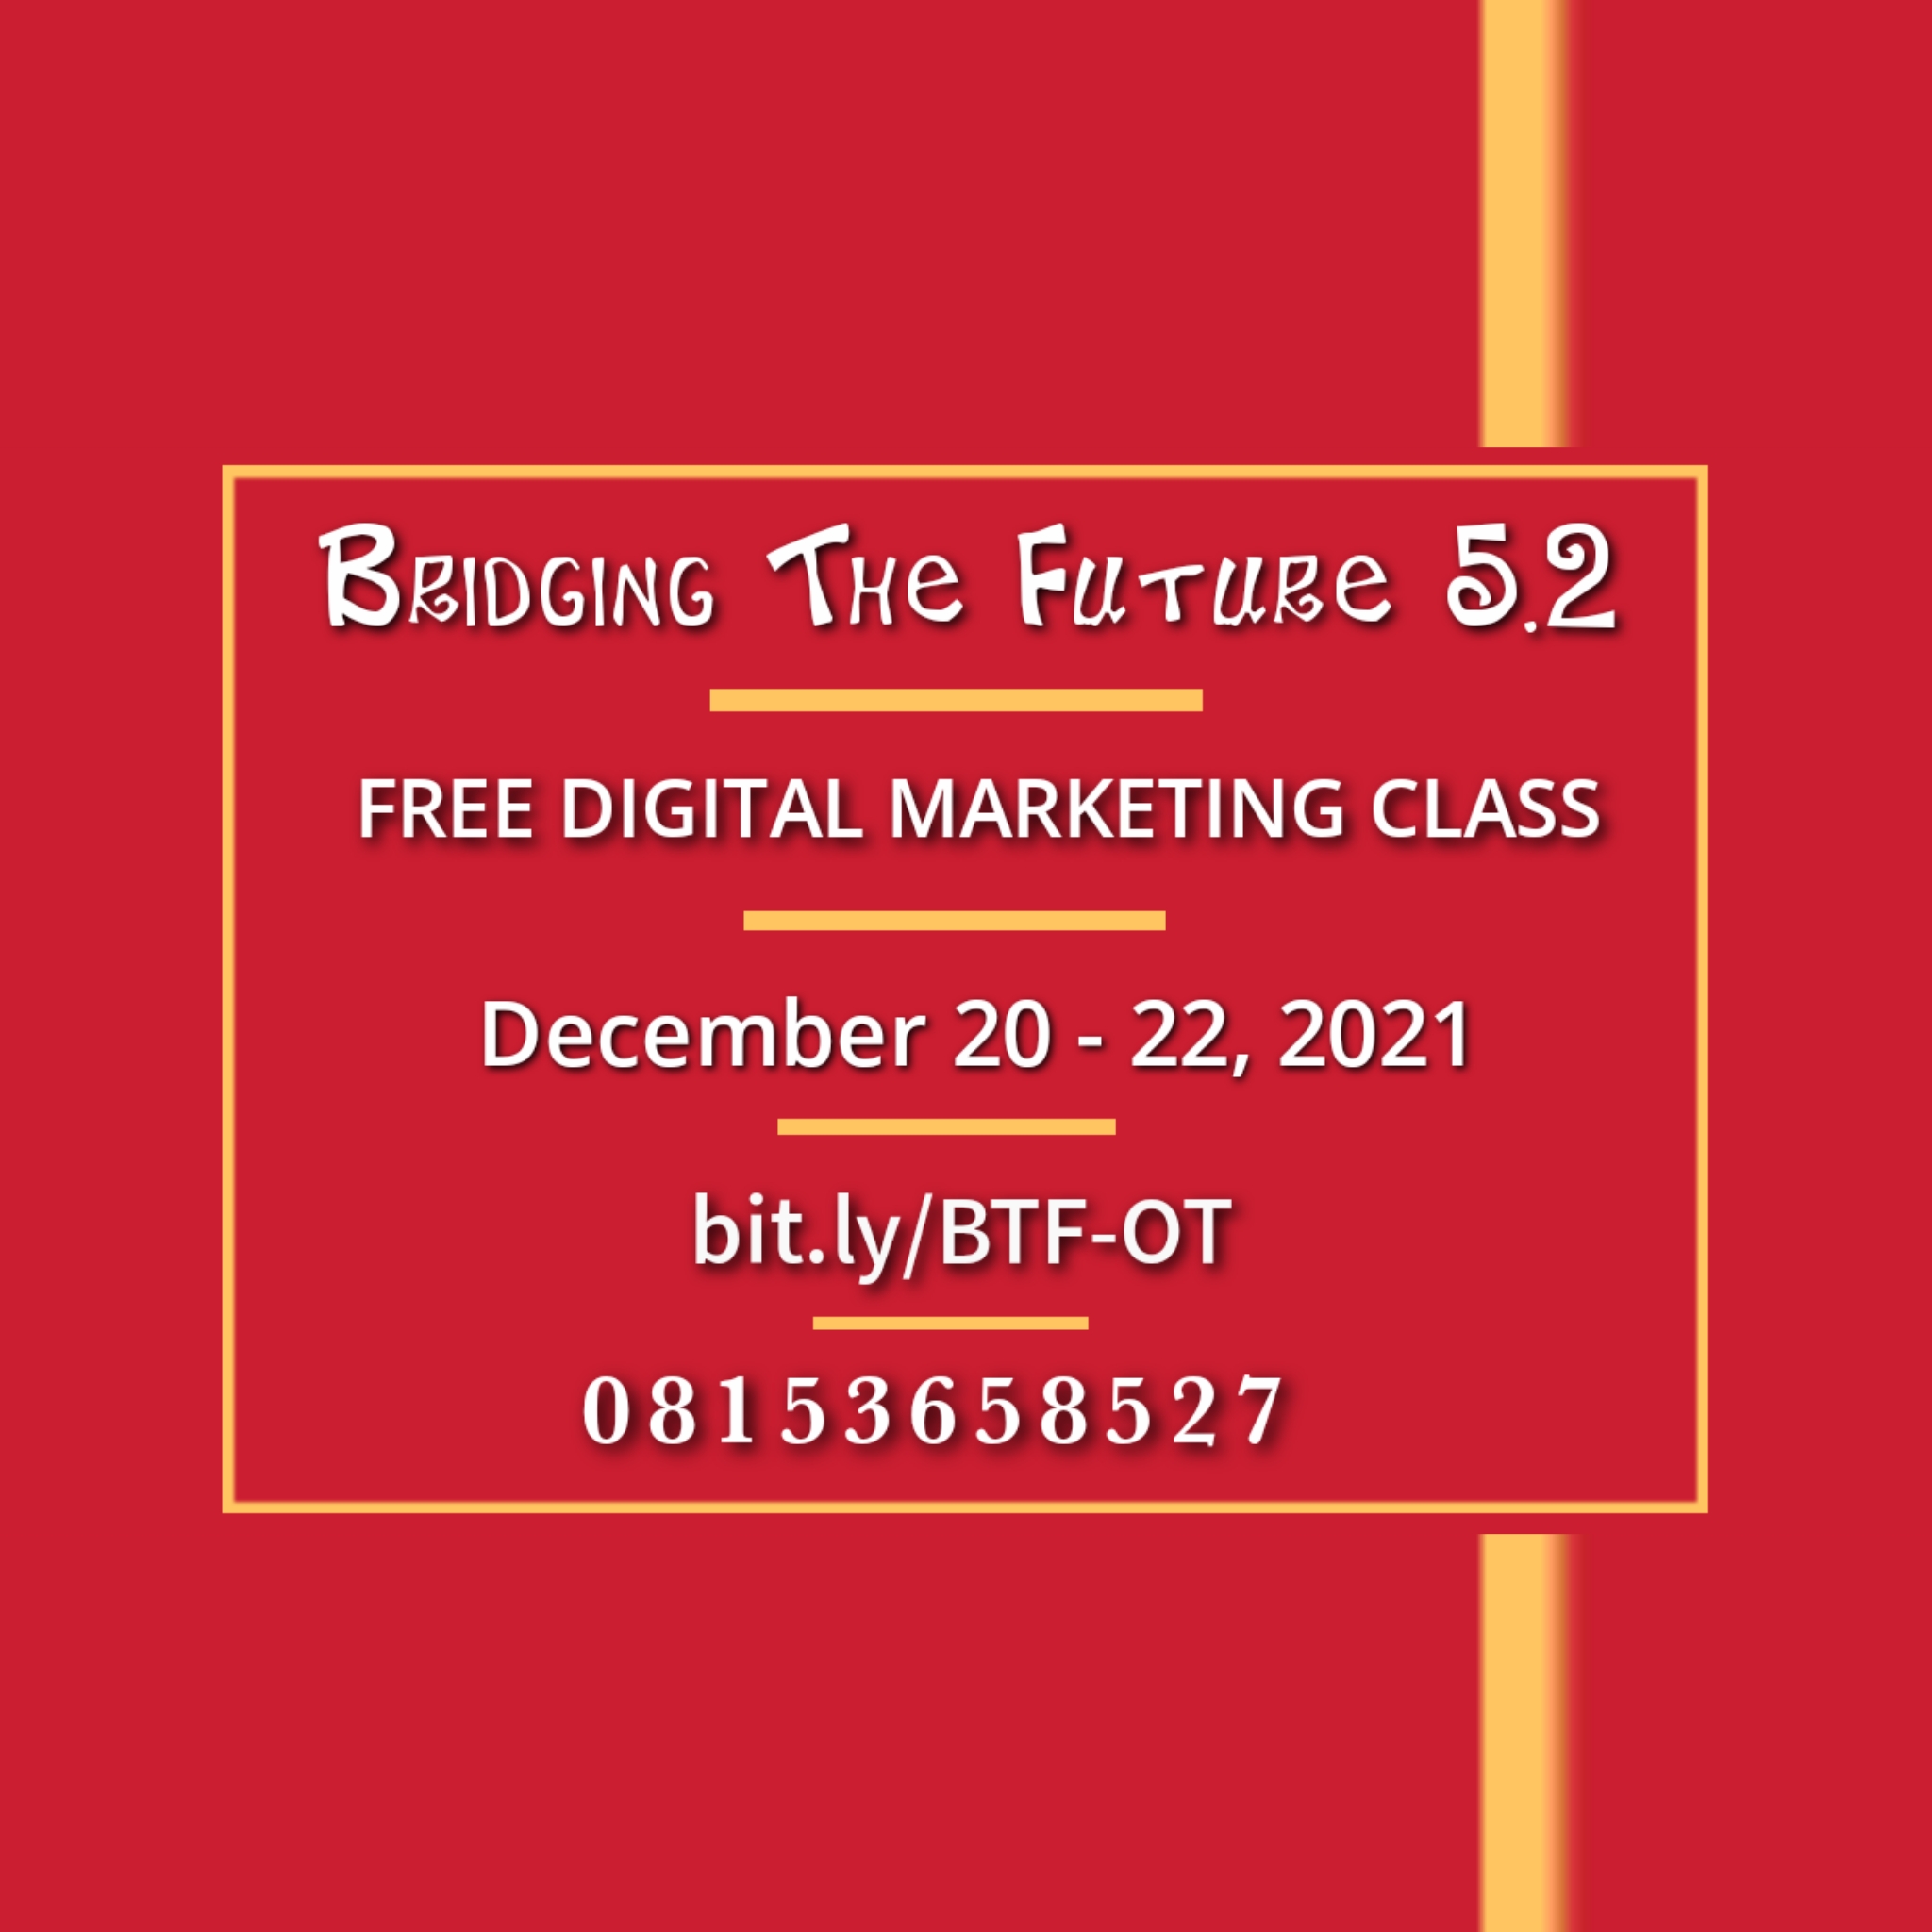 5th Edition of Bridging The Future set to Train Entrepreneurs on Digital Marketing